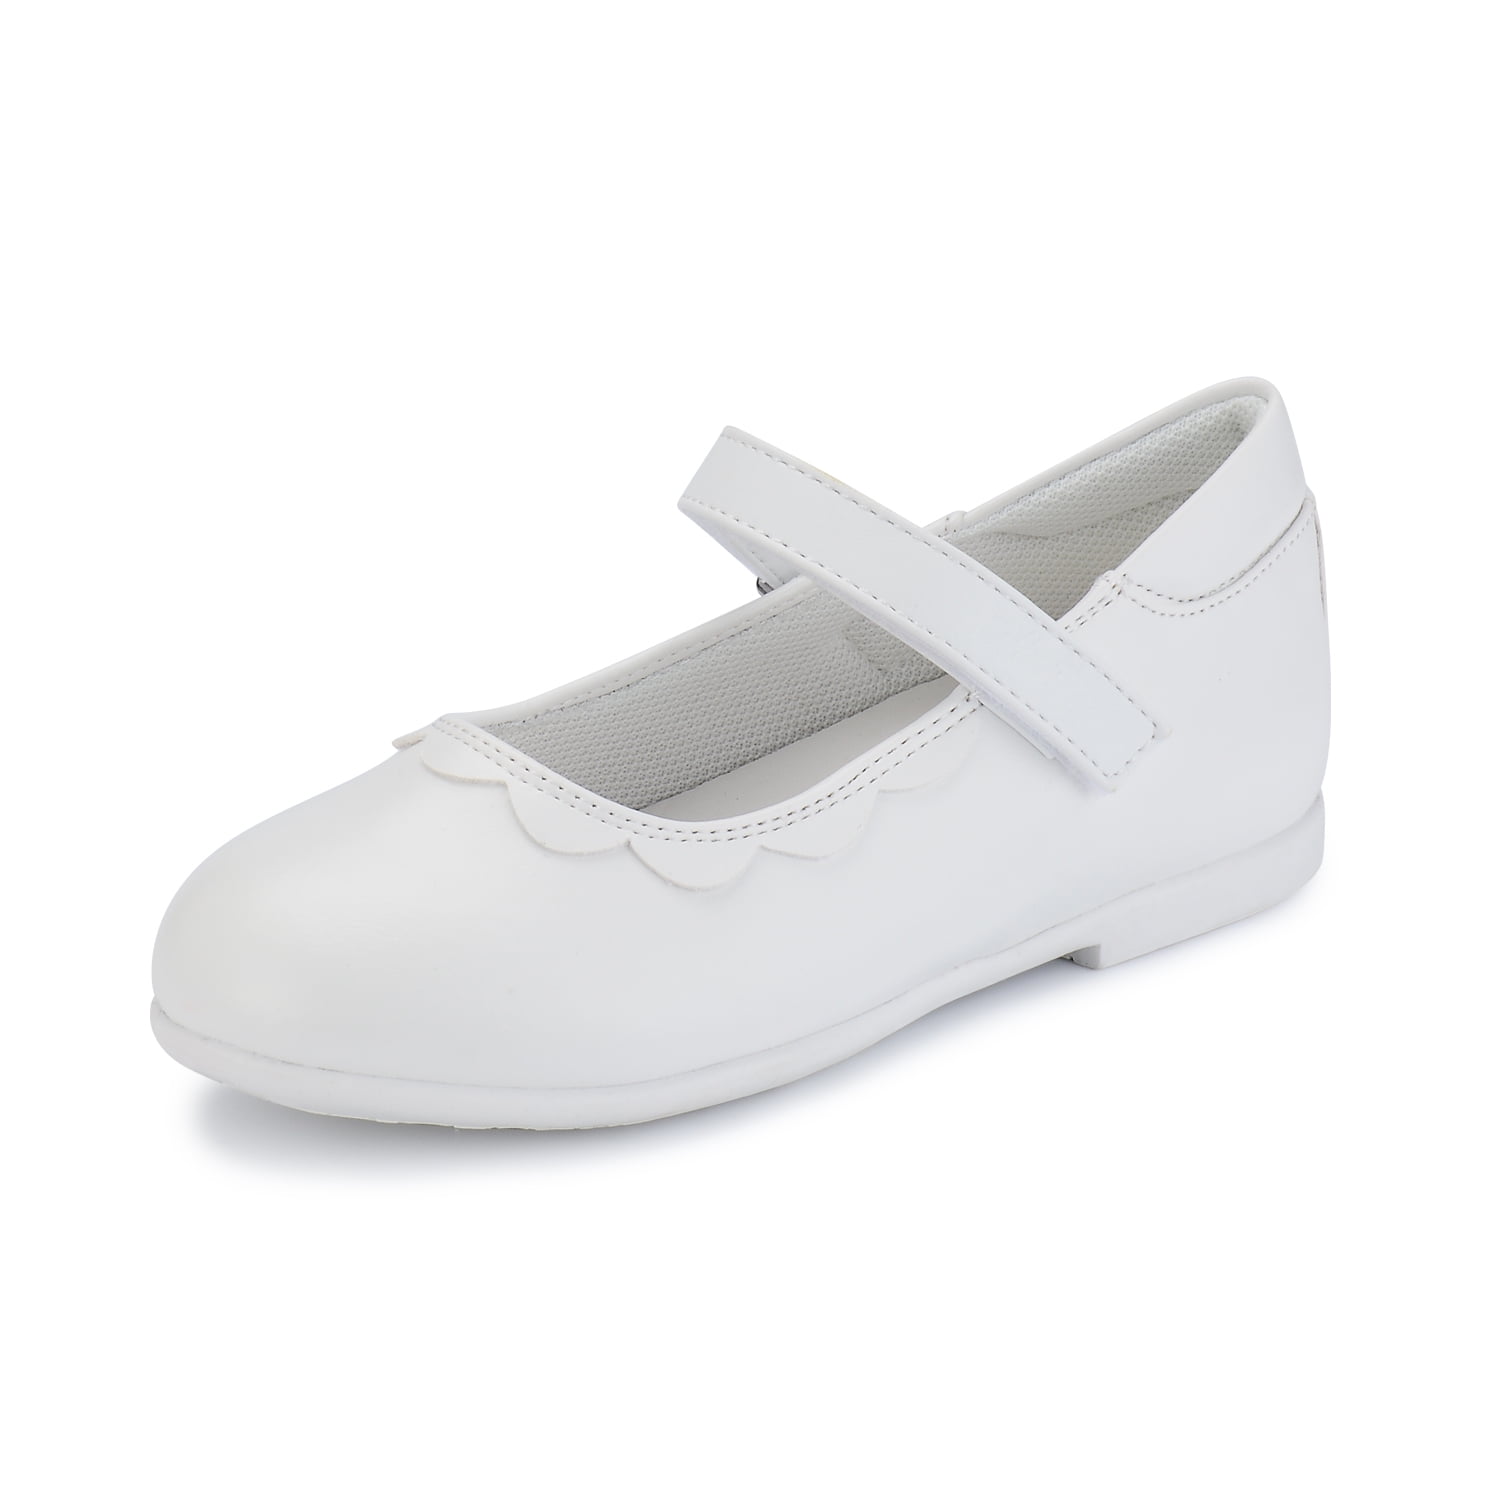 Toddler/Little Kid Girls Mary Jane Ballet Flat Dress Shoe 